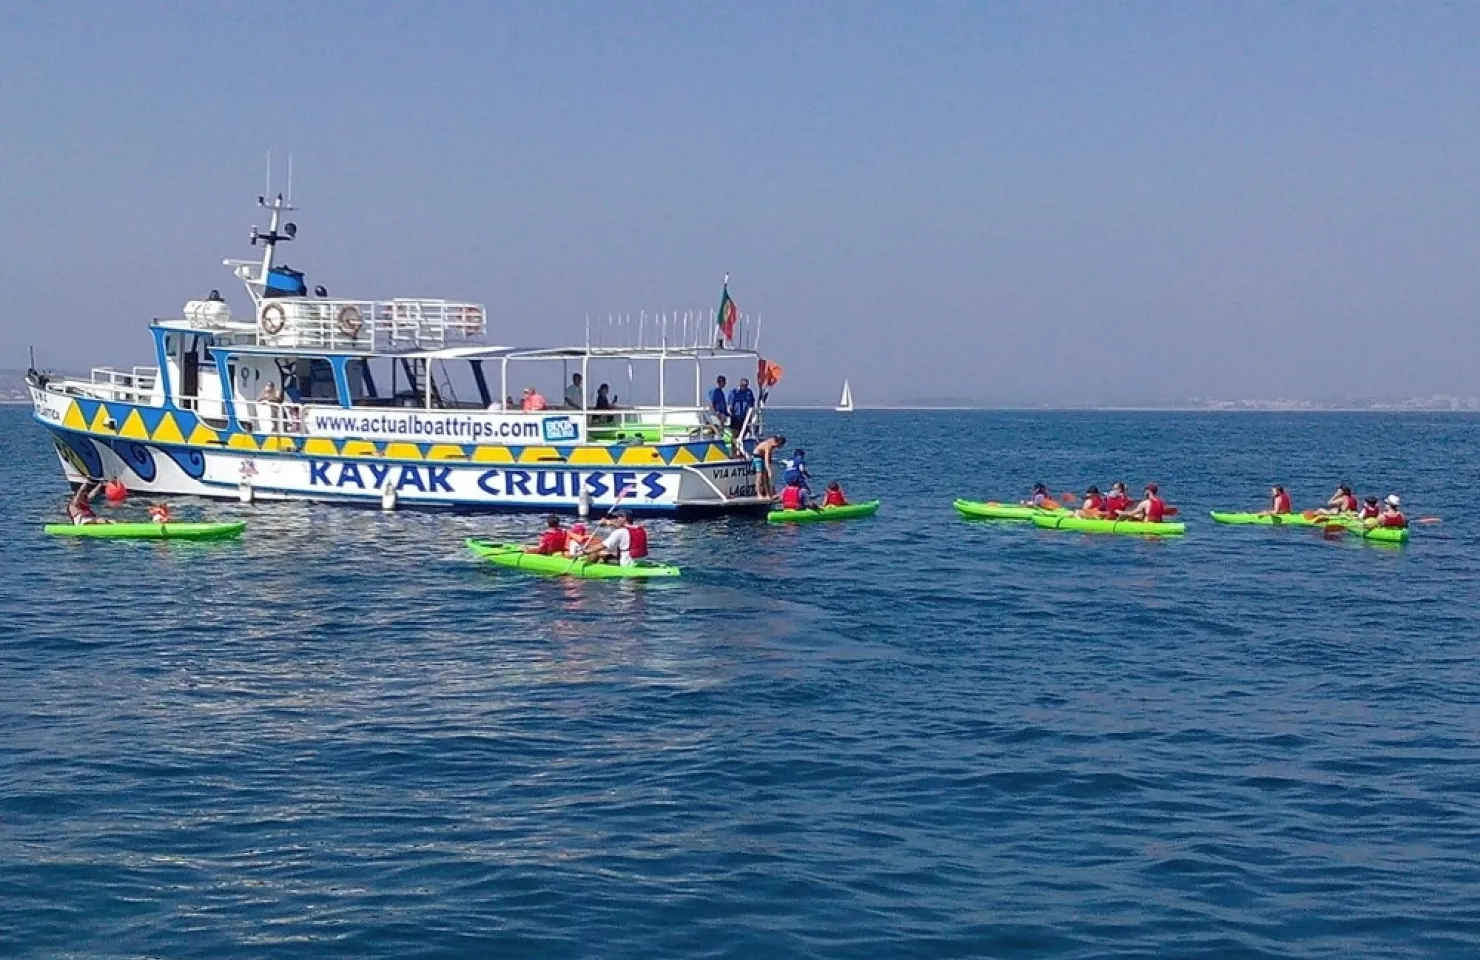 Actual Kayak Tour Lagos - Vilamoura Boat Trips